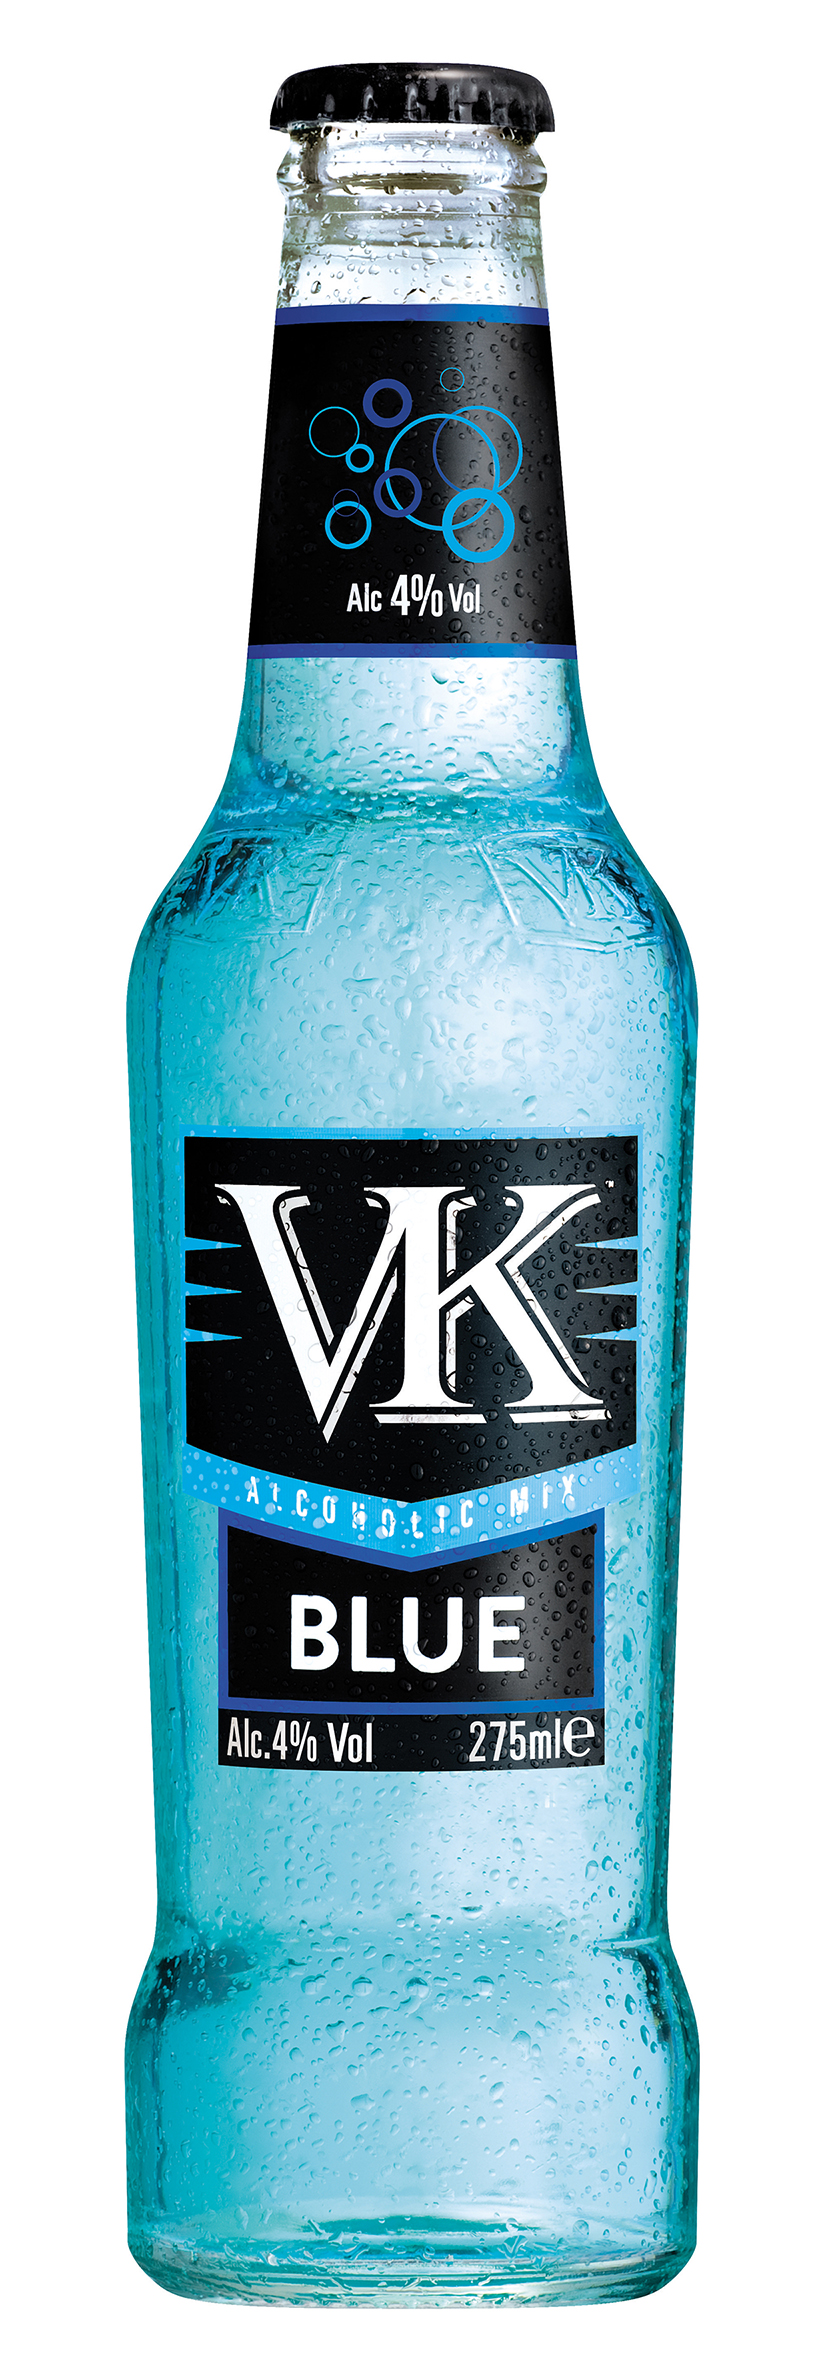 VK Ice - Brewery International